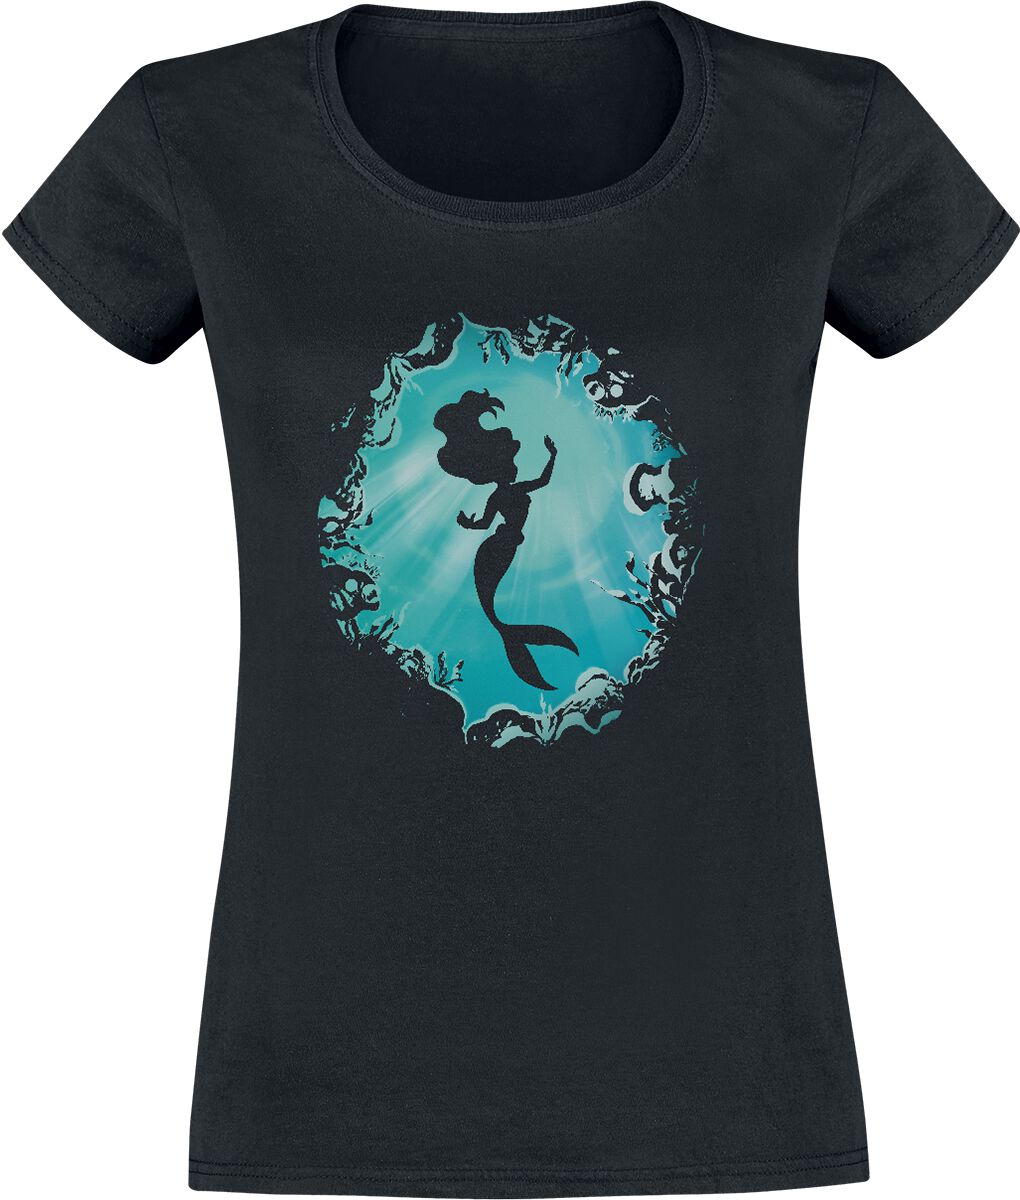 The Little Mermaid Ariel T-Shirt black